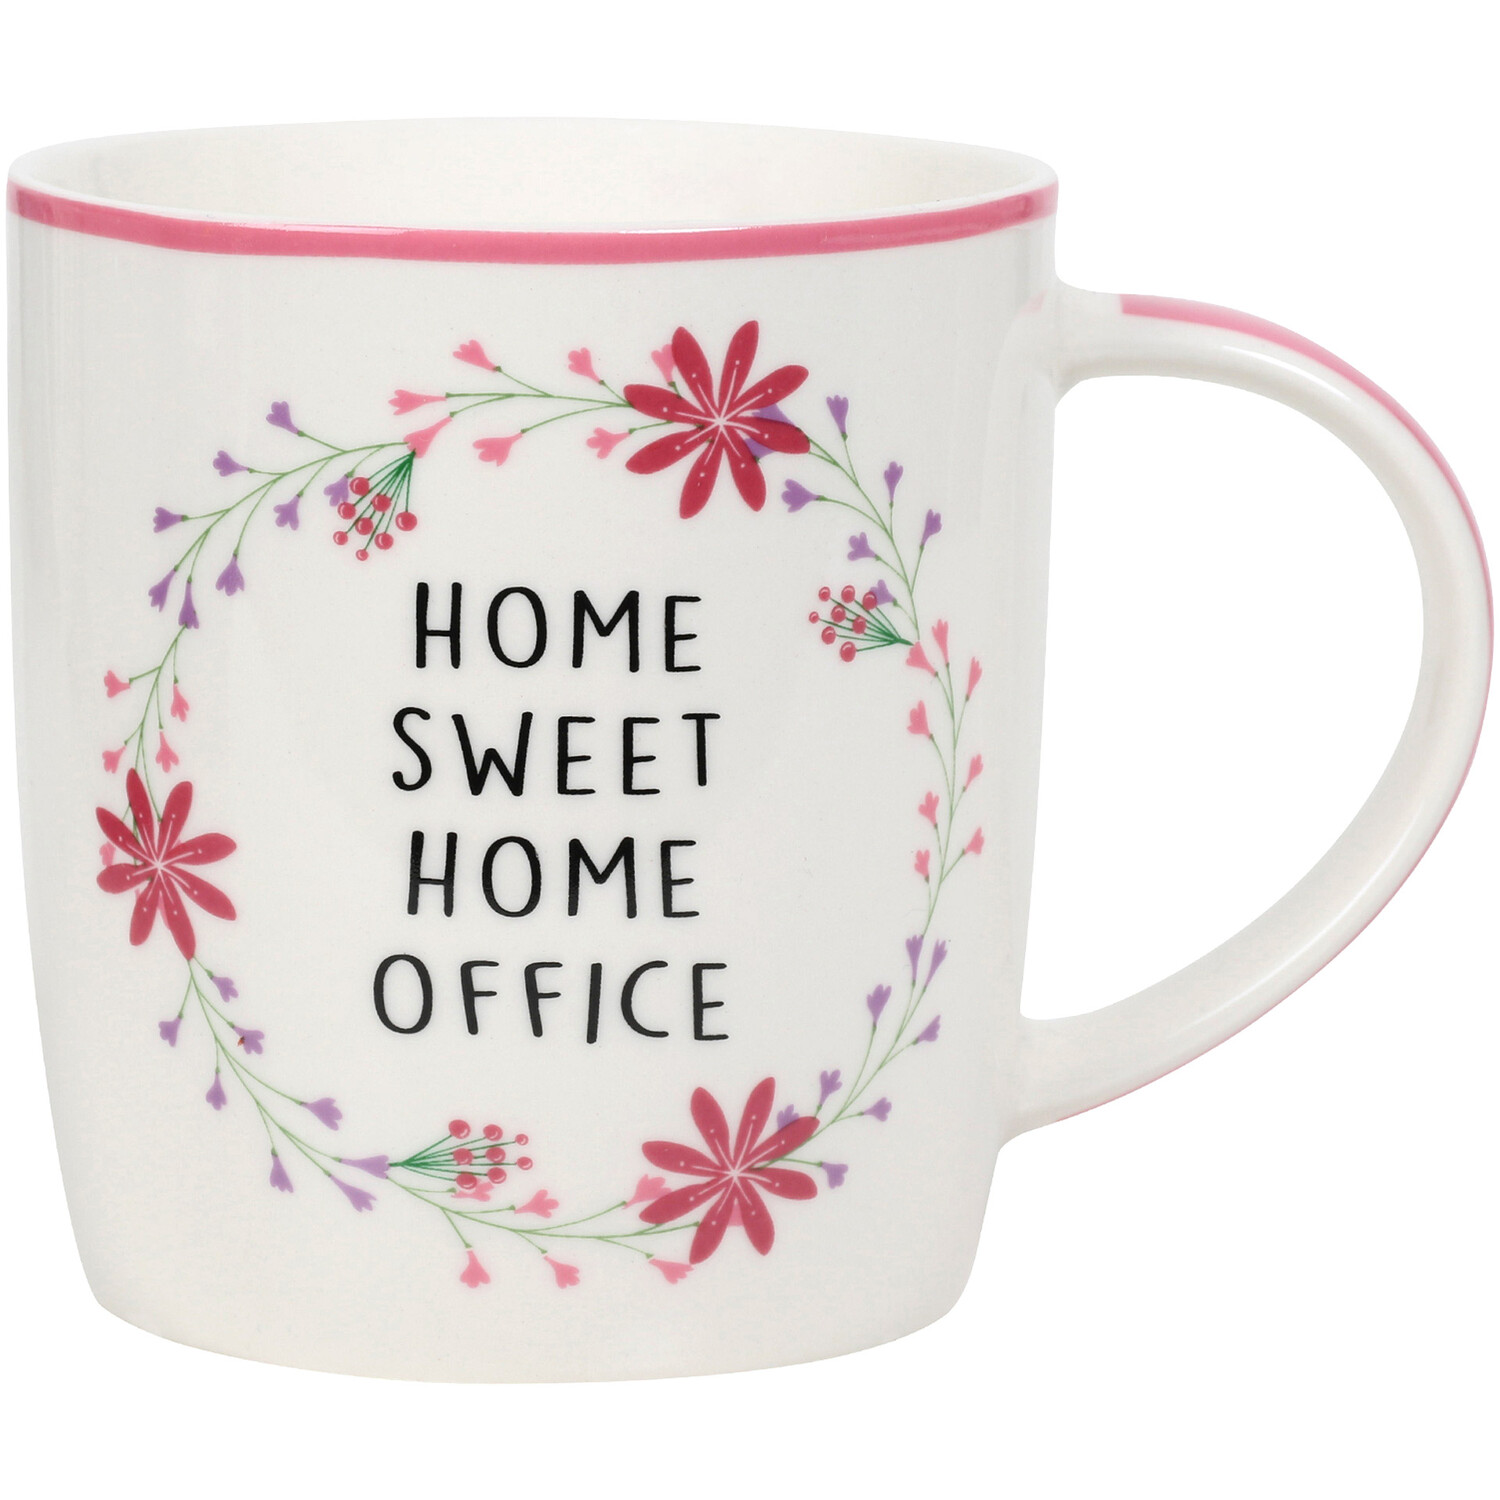 Home Sweet Home Office Mug - Pink Image 1